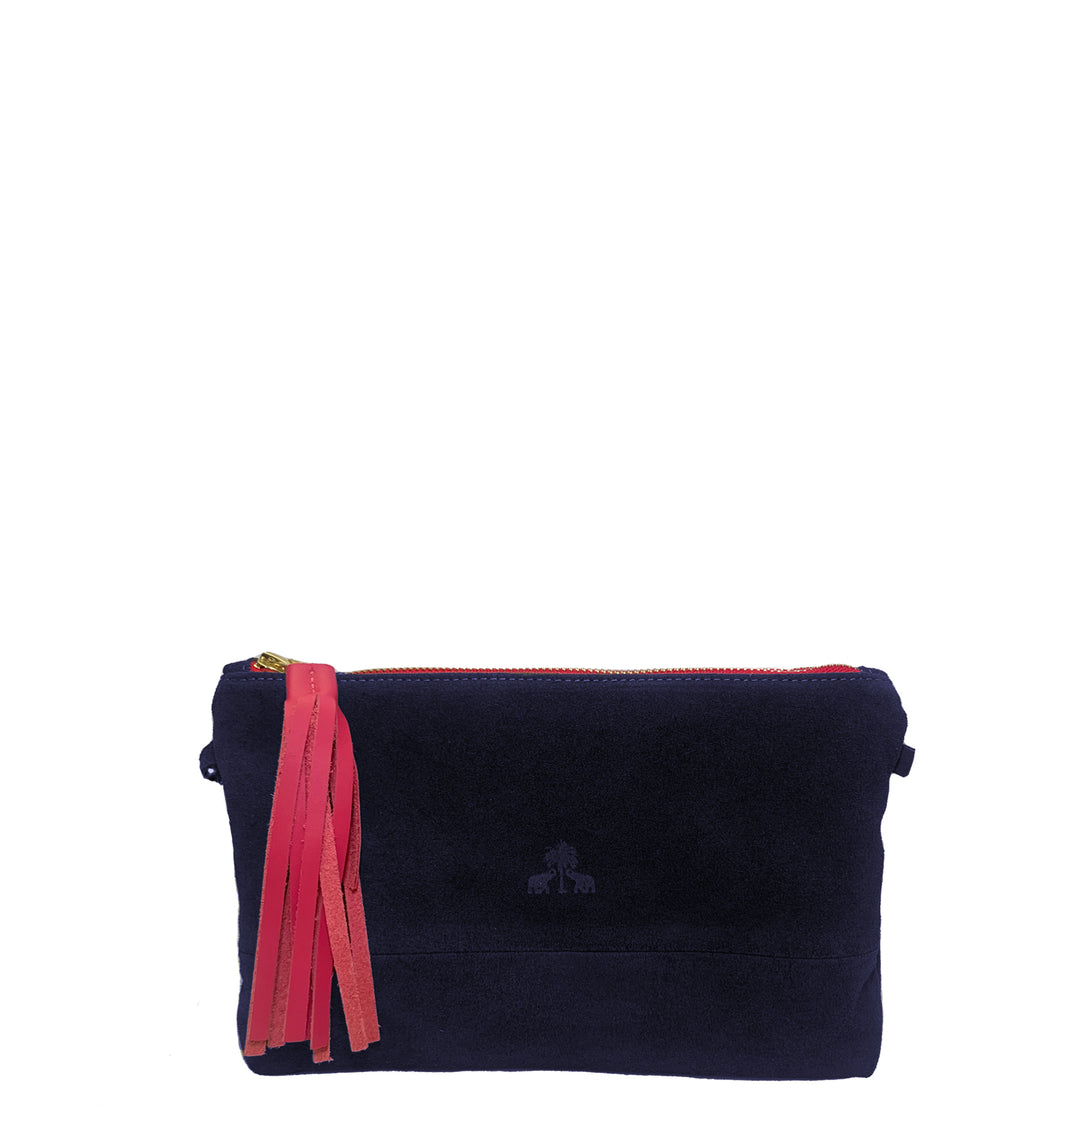 Clutch Bag CLARA -dunkelblau & pink-